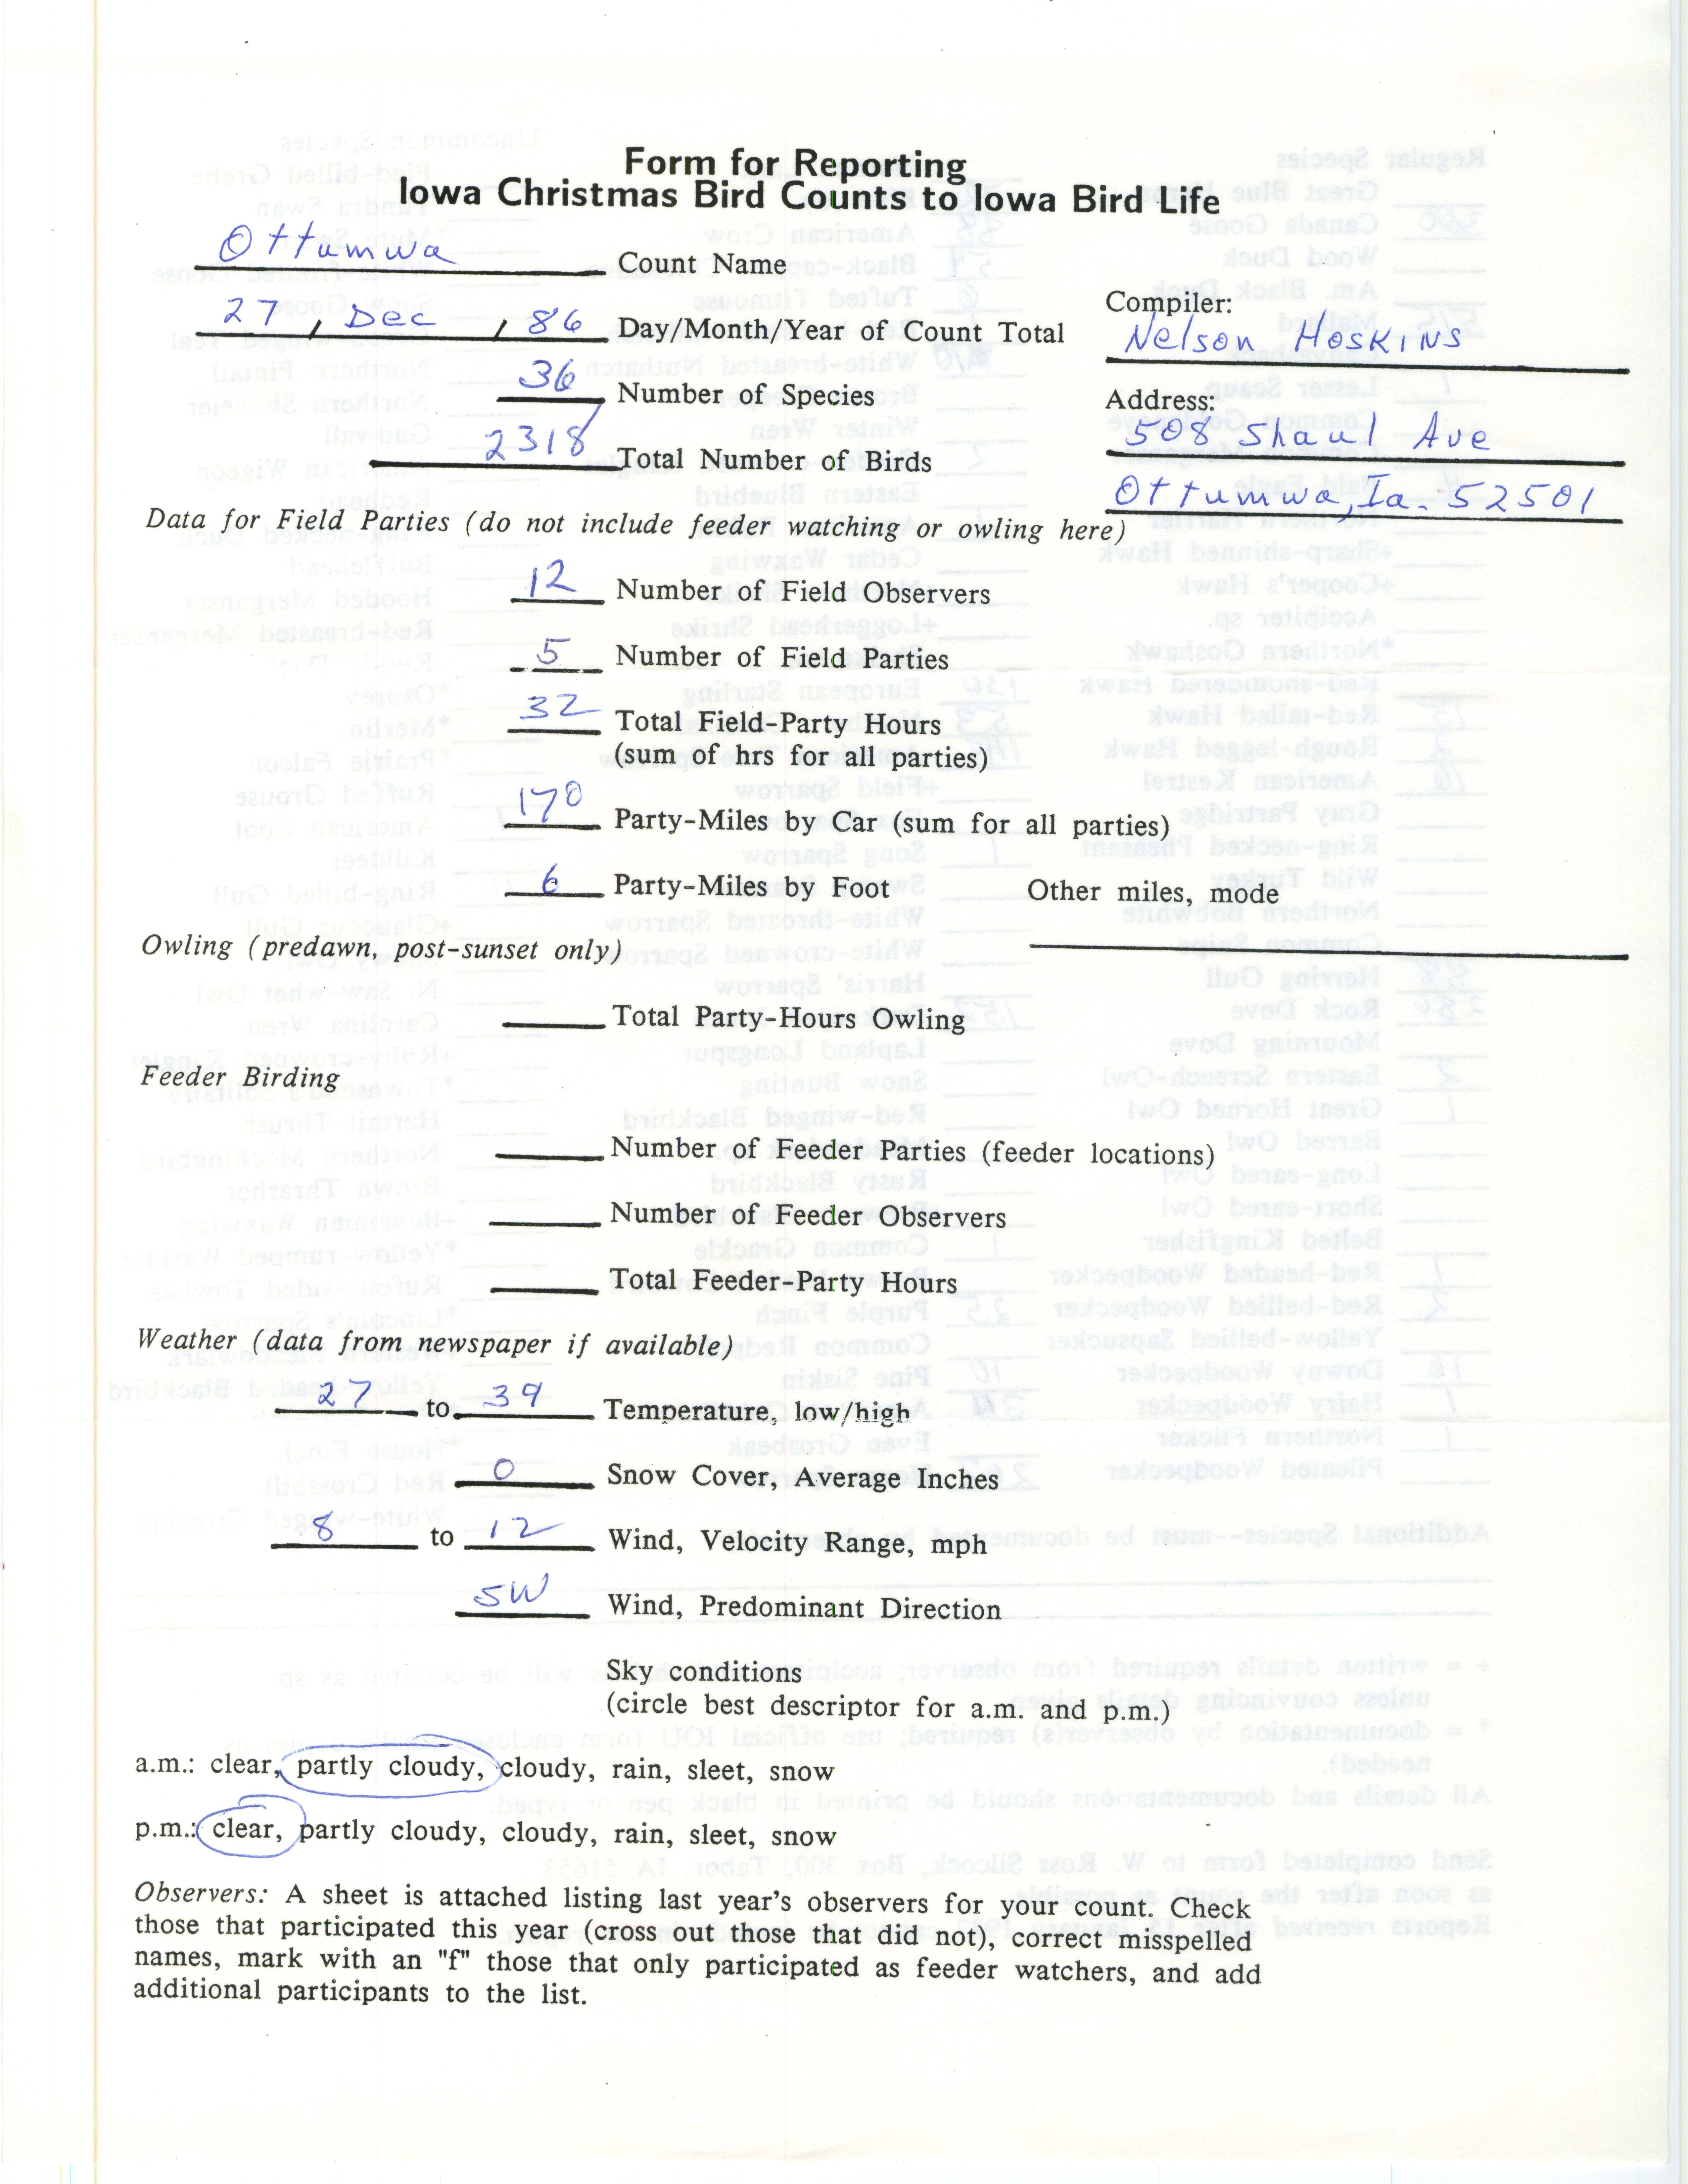 Form for reporting Iowa Christmas bird counts to Iowa Bird Life, Nelson R. Hoskins, December 27, 1986